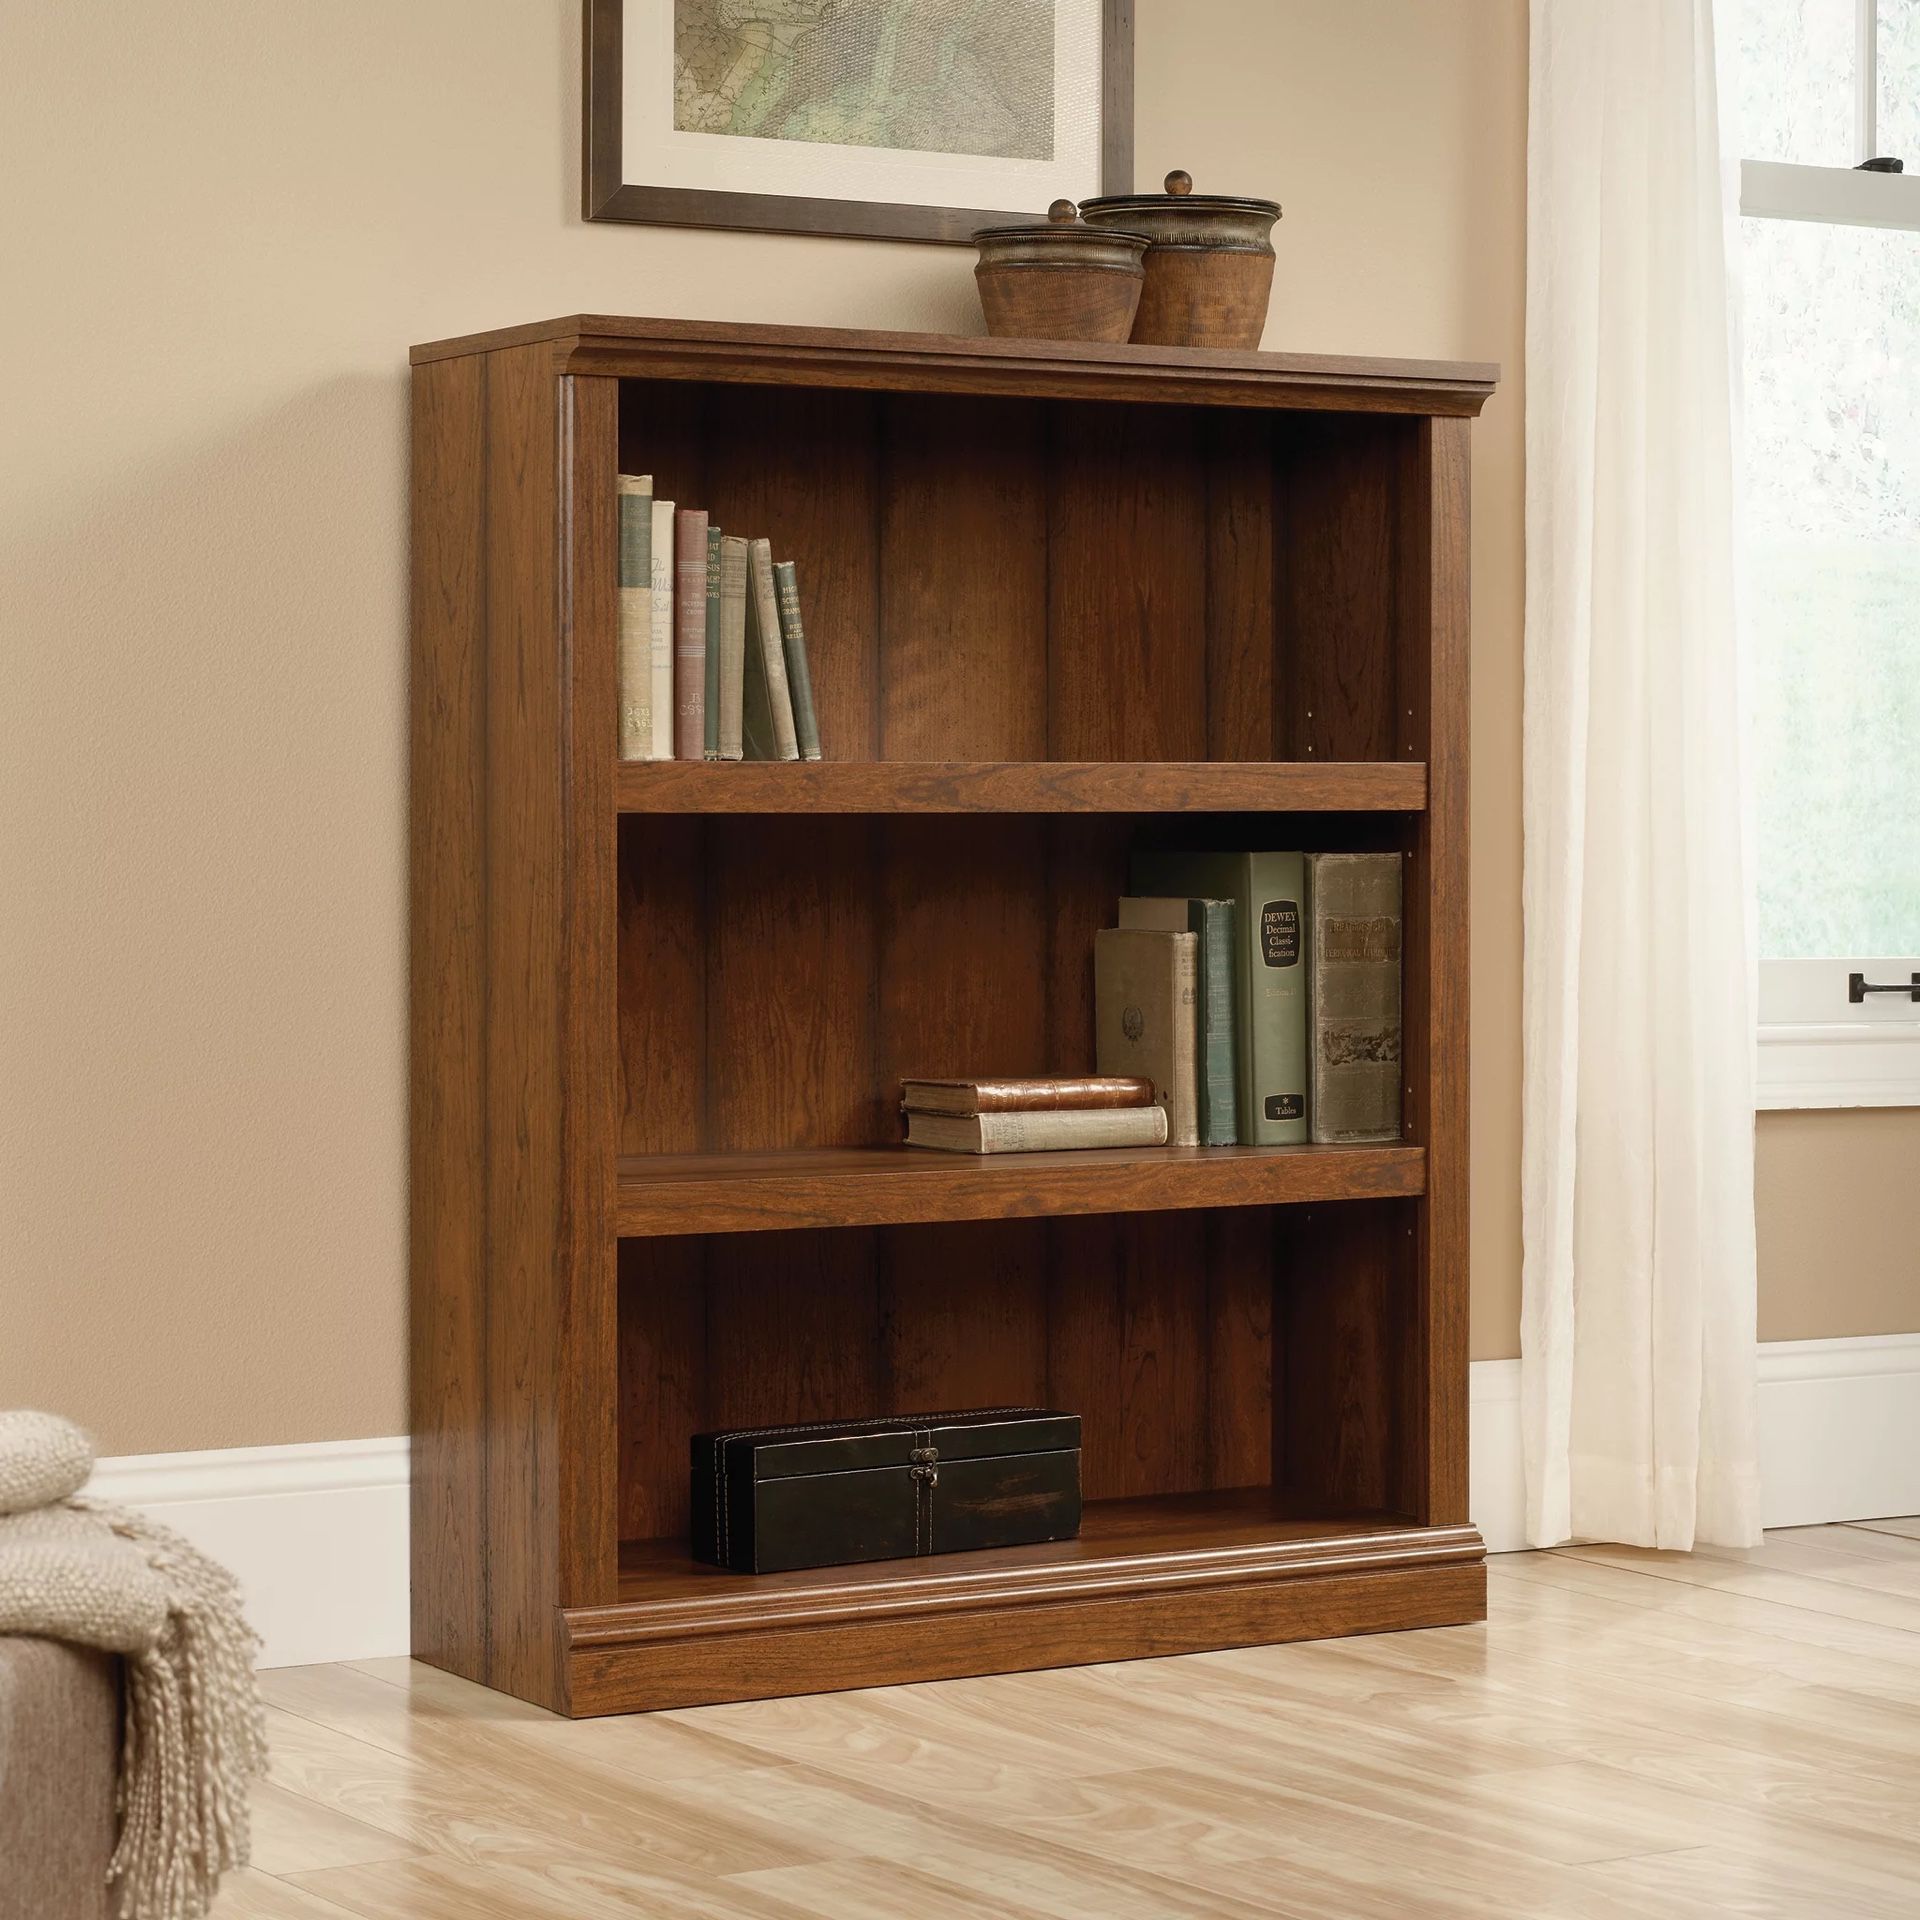 Sauder Select 3-Shelf Bookcase, Washington Cherry Finish Washington Cherry - 35.276" L x 13.228" W x 43.78" H